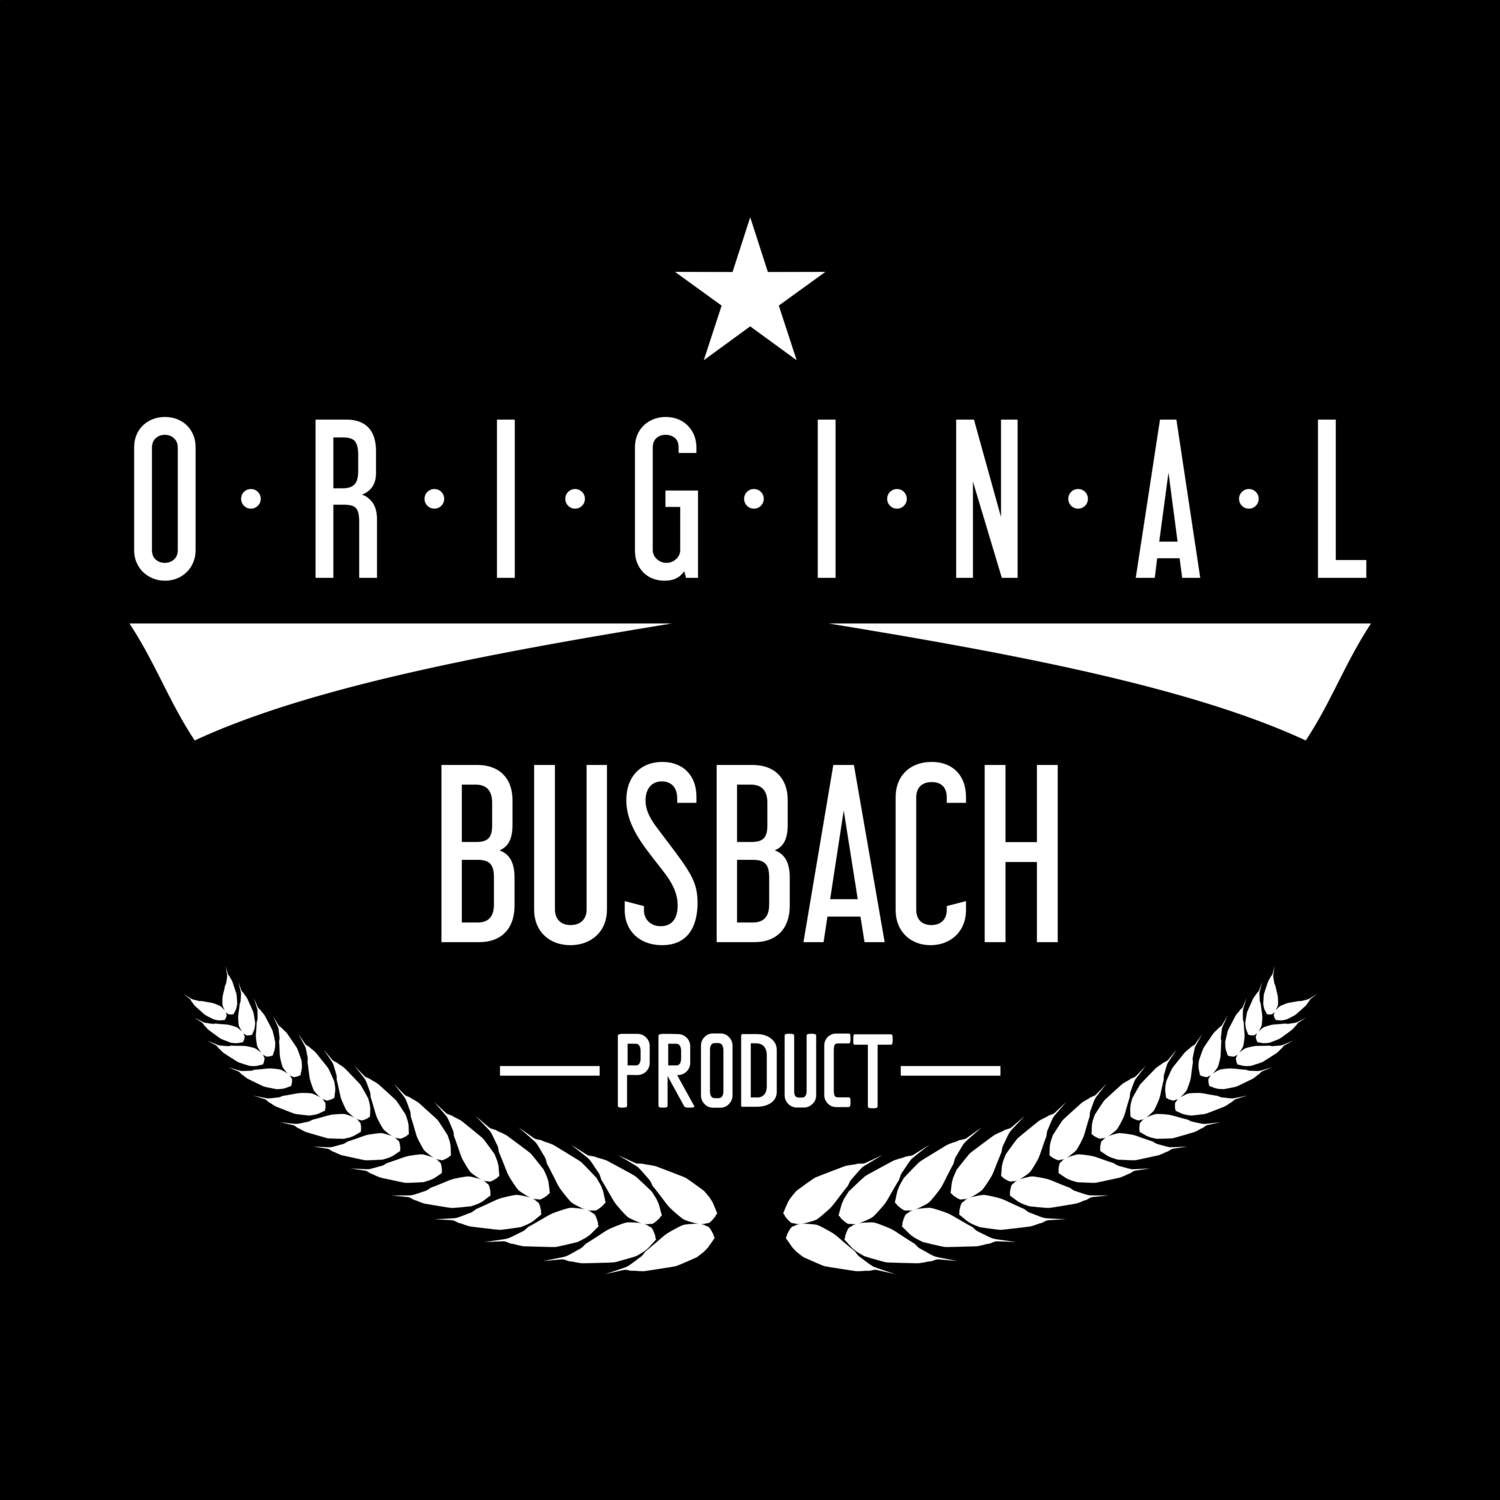 Busbach T-Shirt »Original Product«